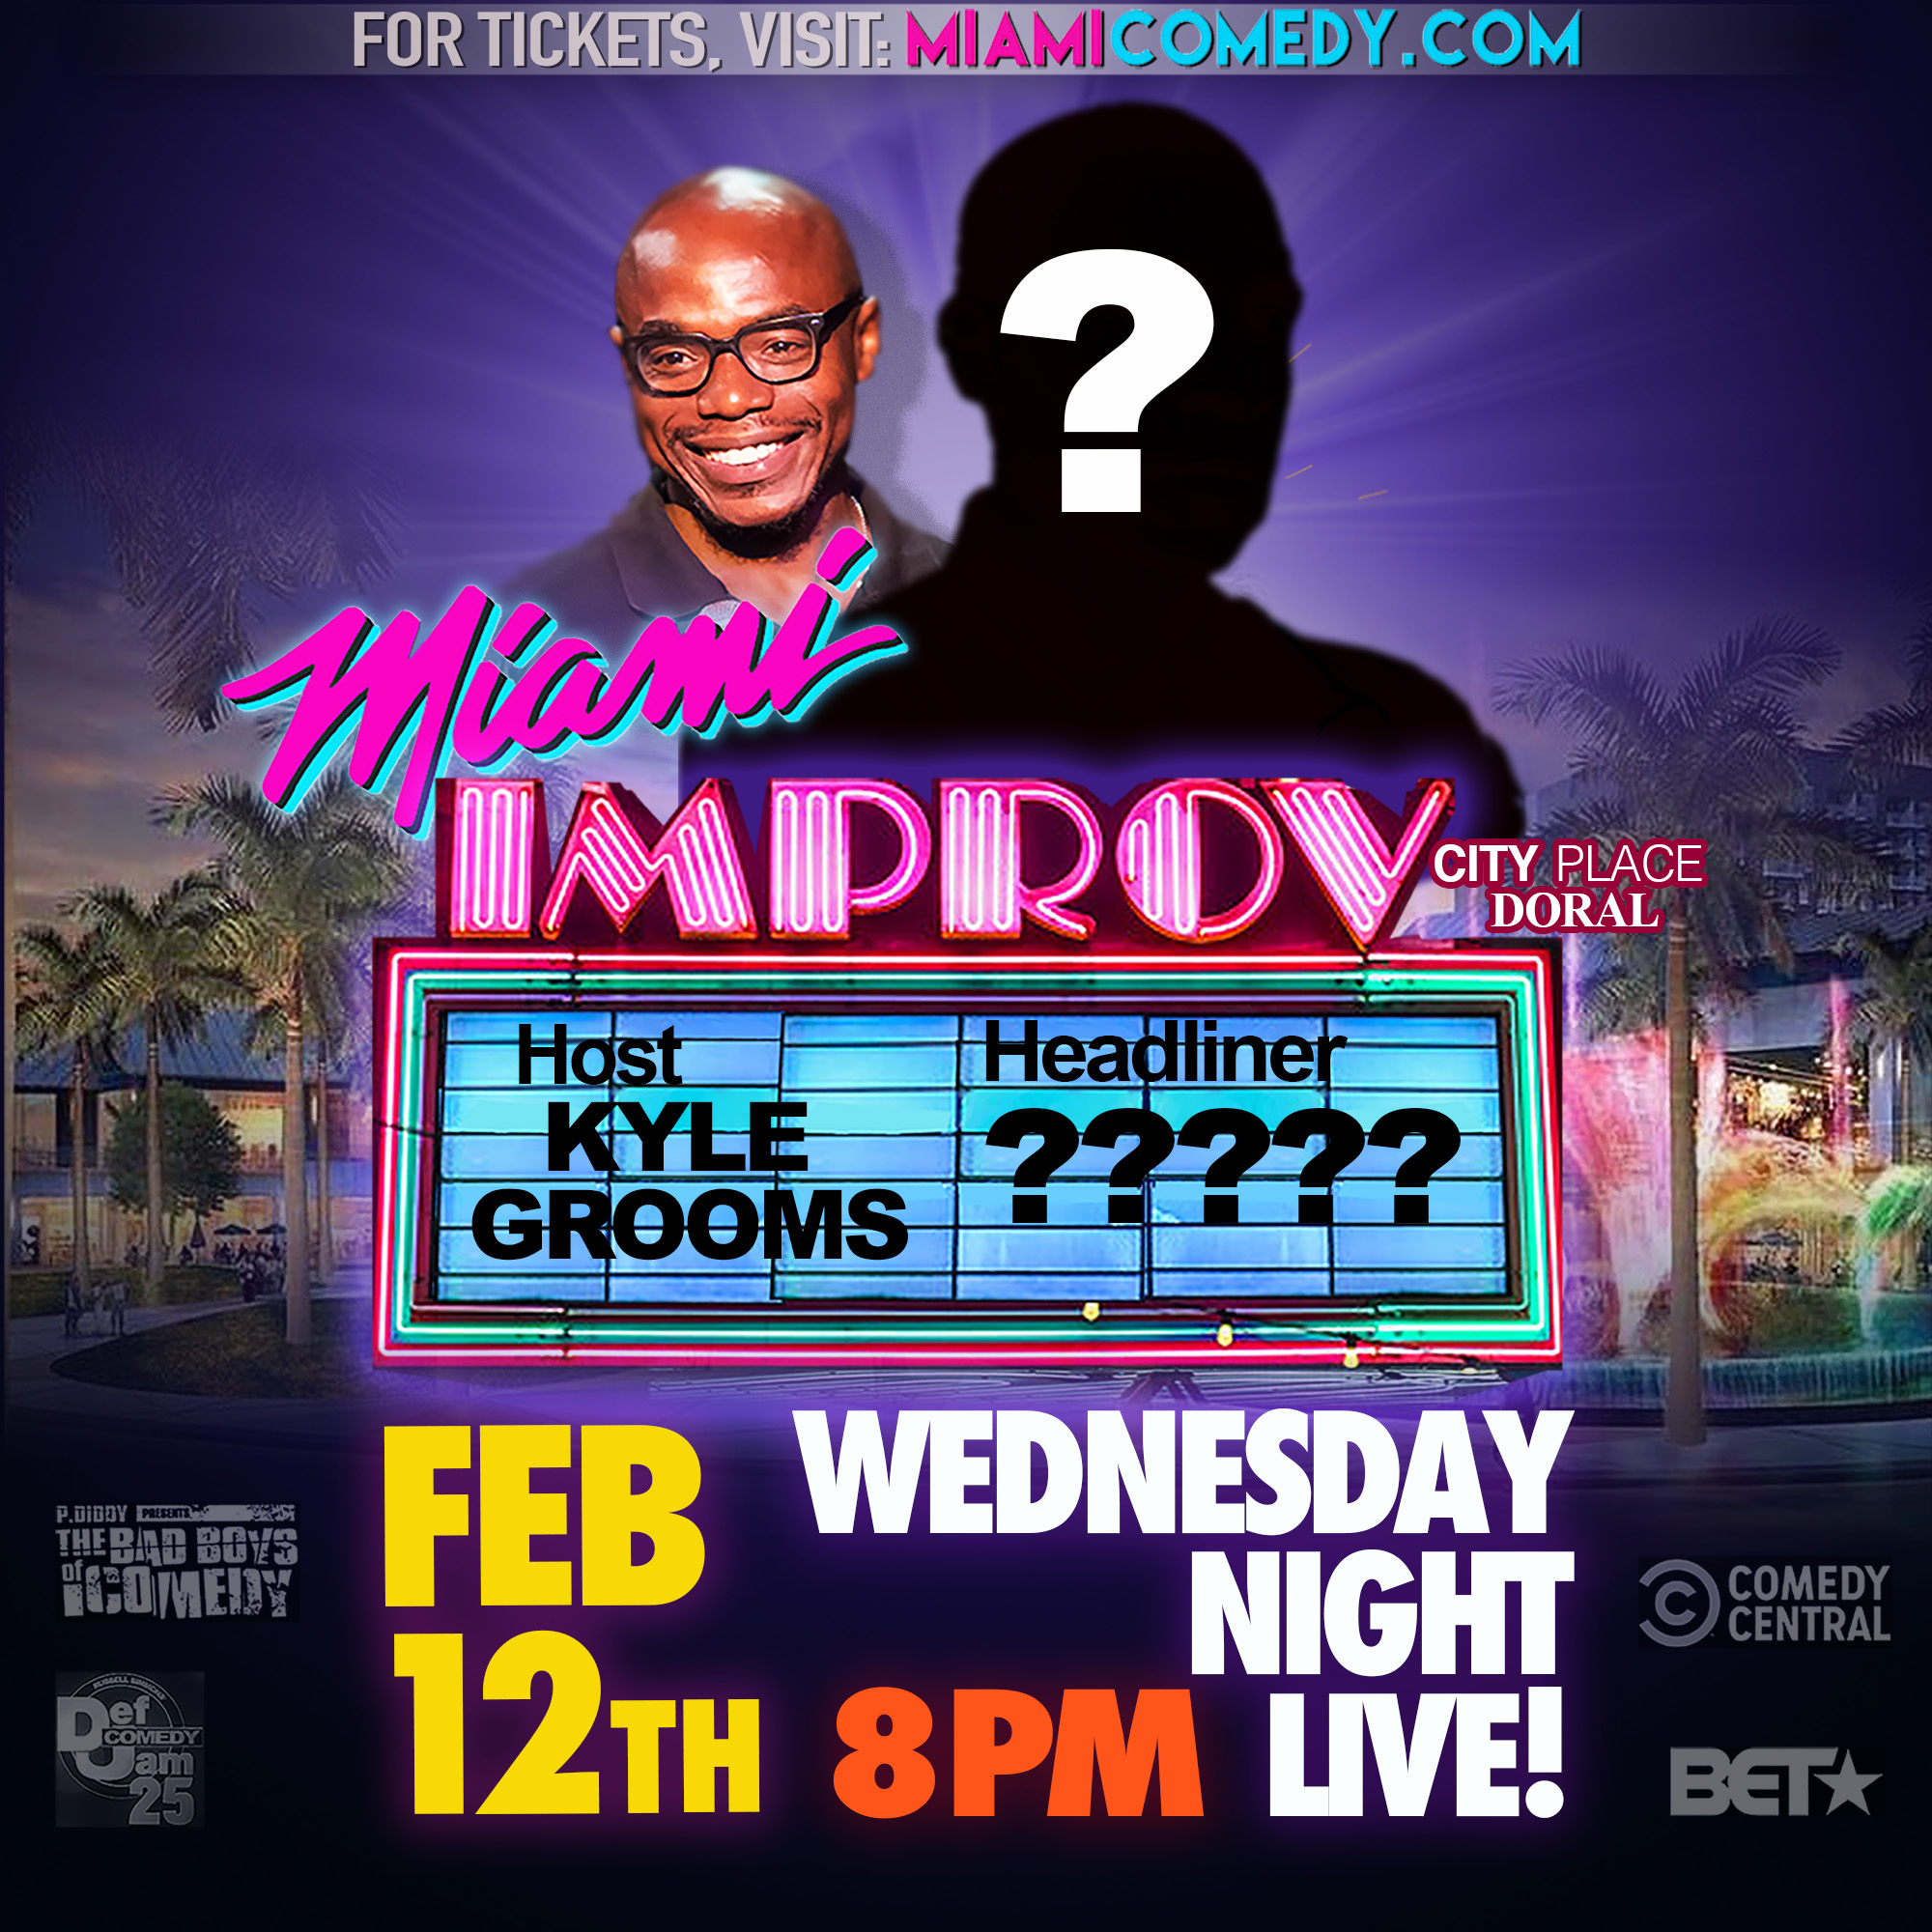 Wednesday Night Live February 12 2020